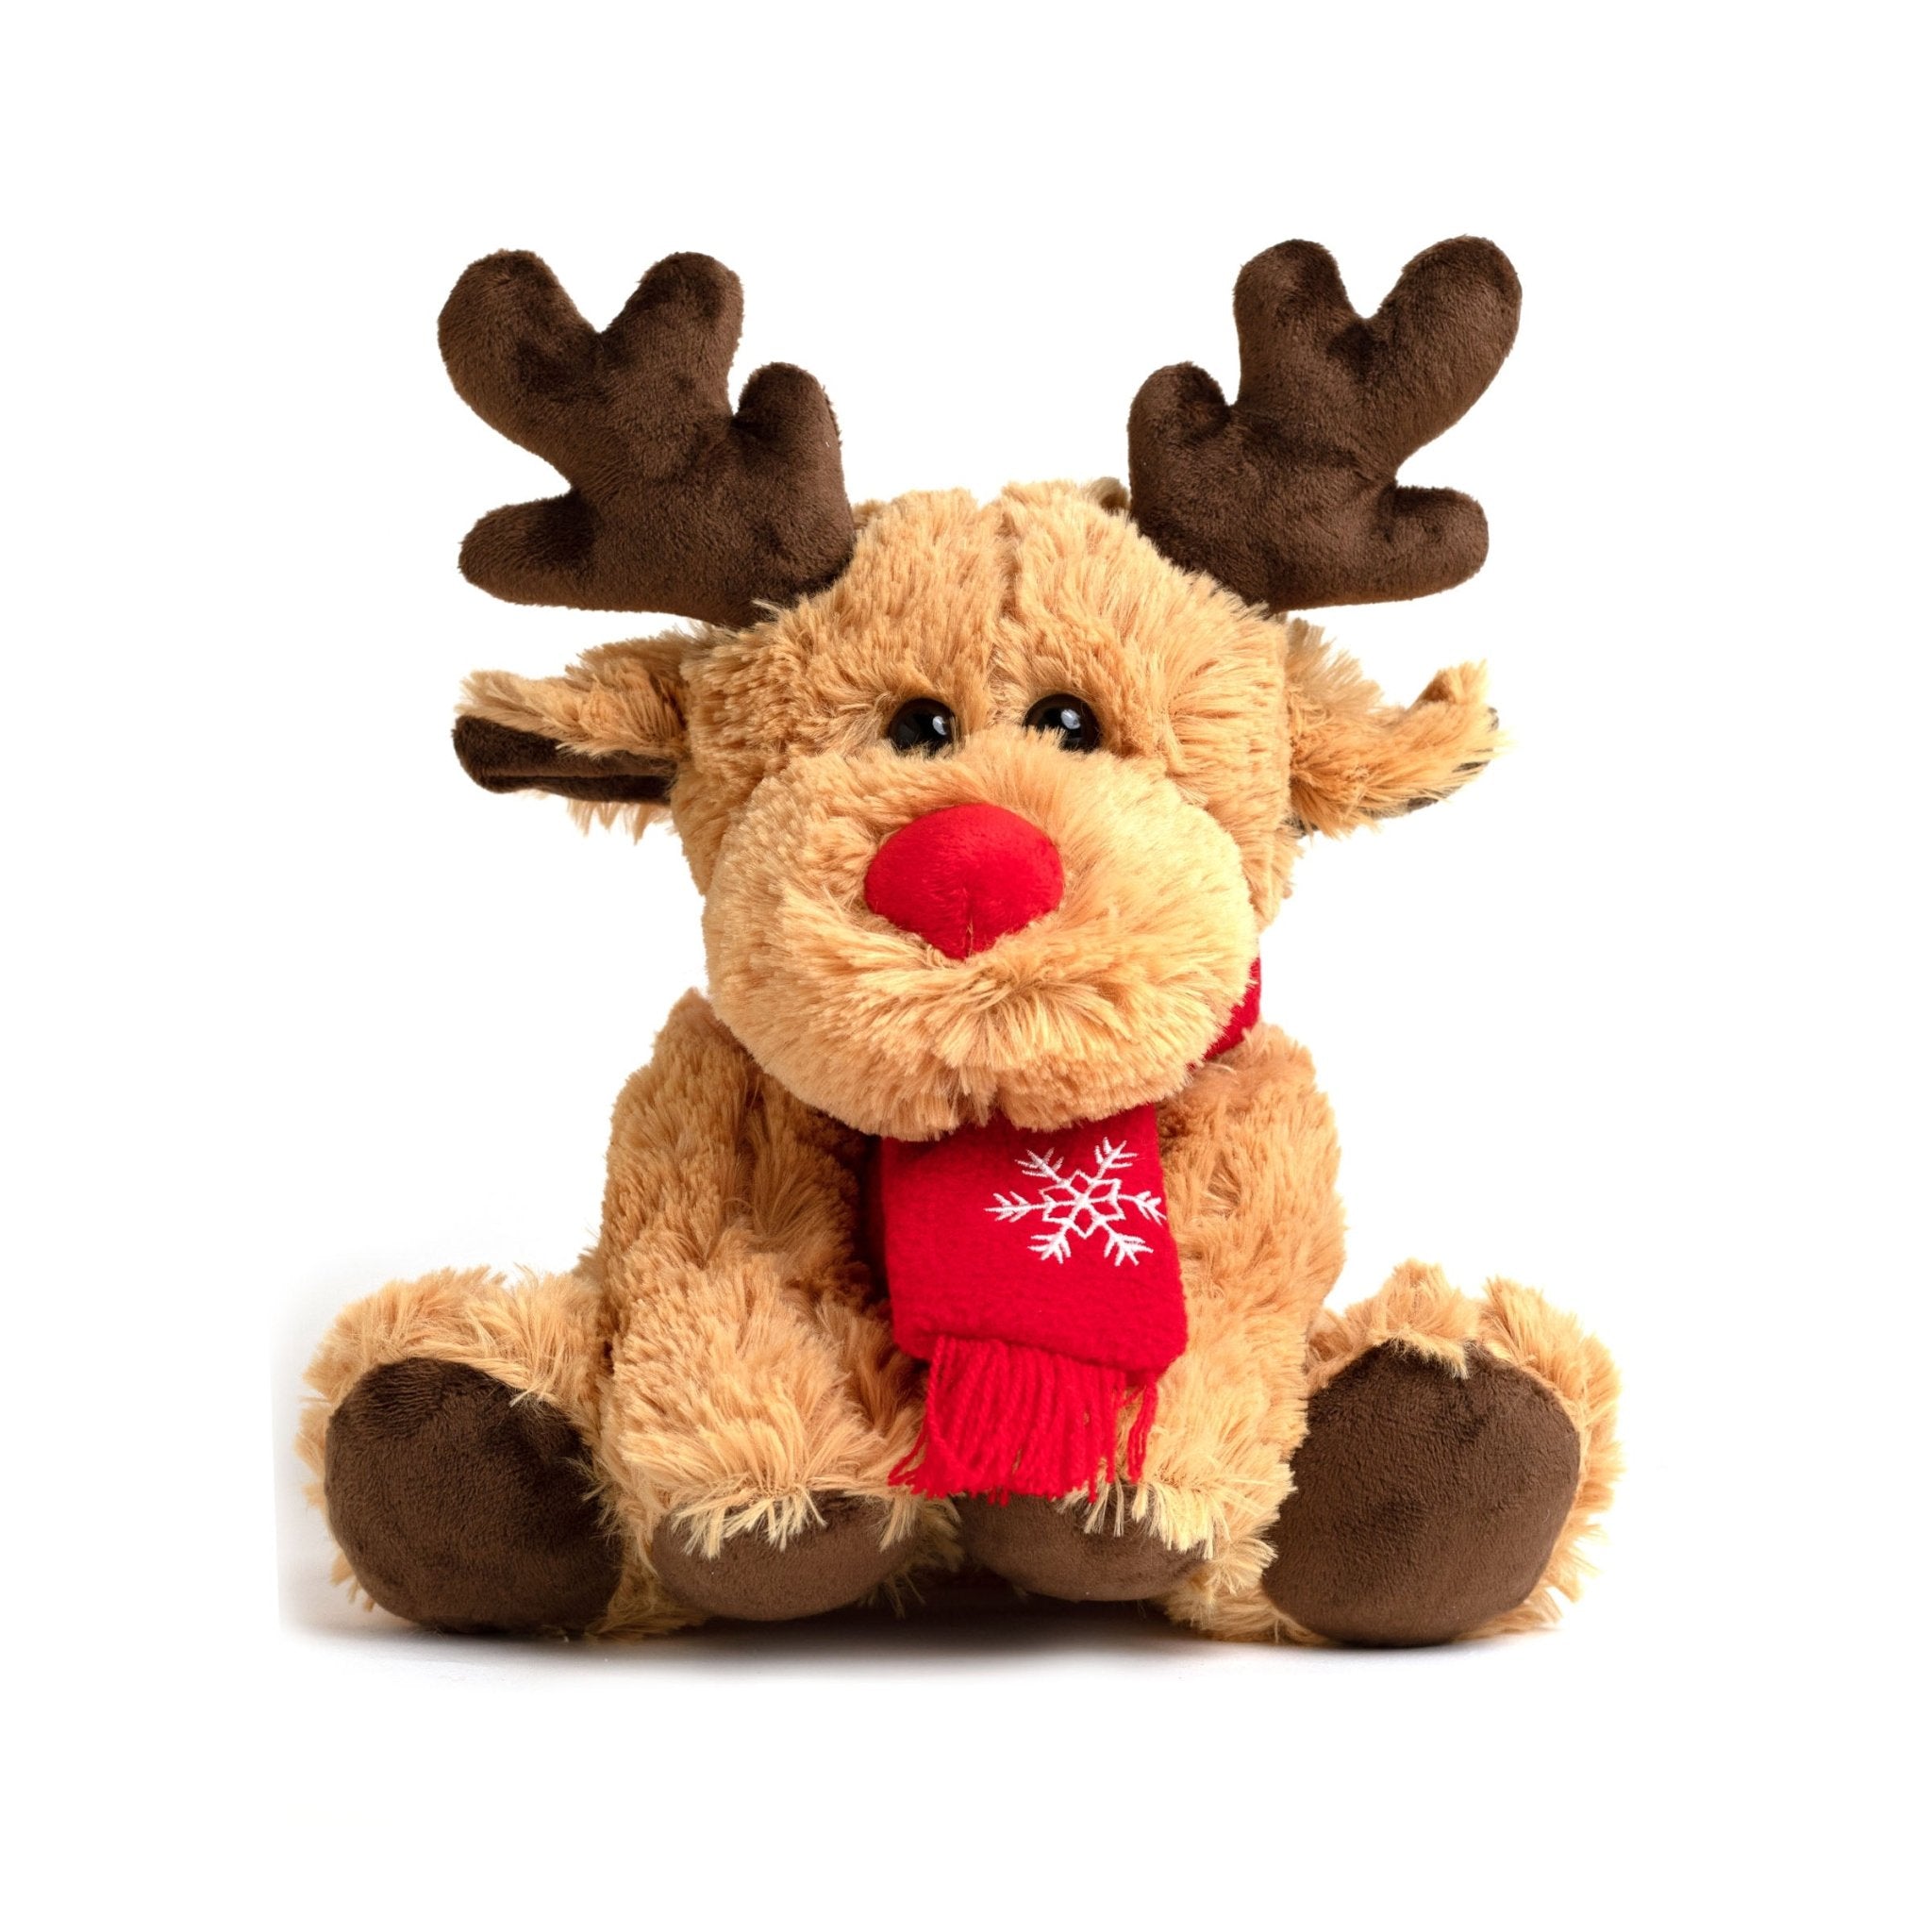 27cm Rudolph the Red Nose Reindeer Plush Doll - MODA FLORA Santa's Workshop